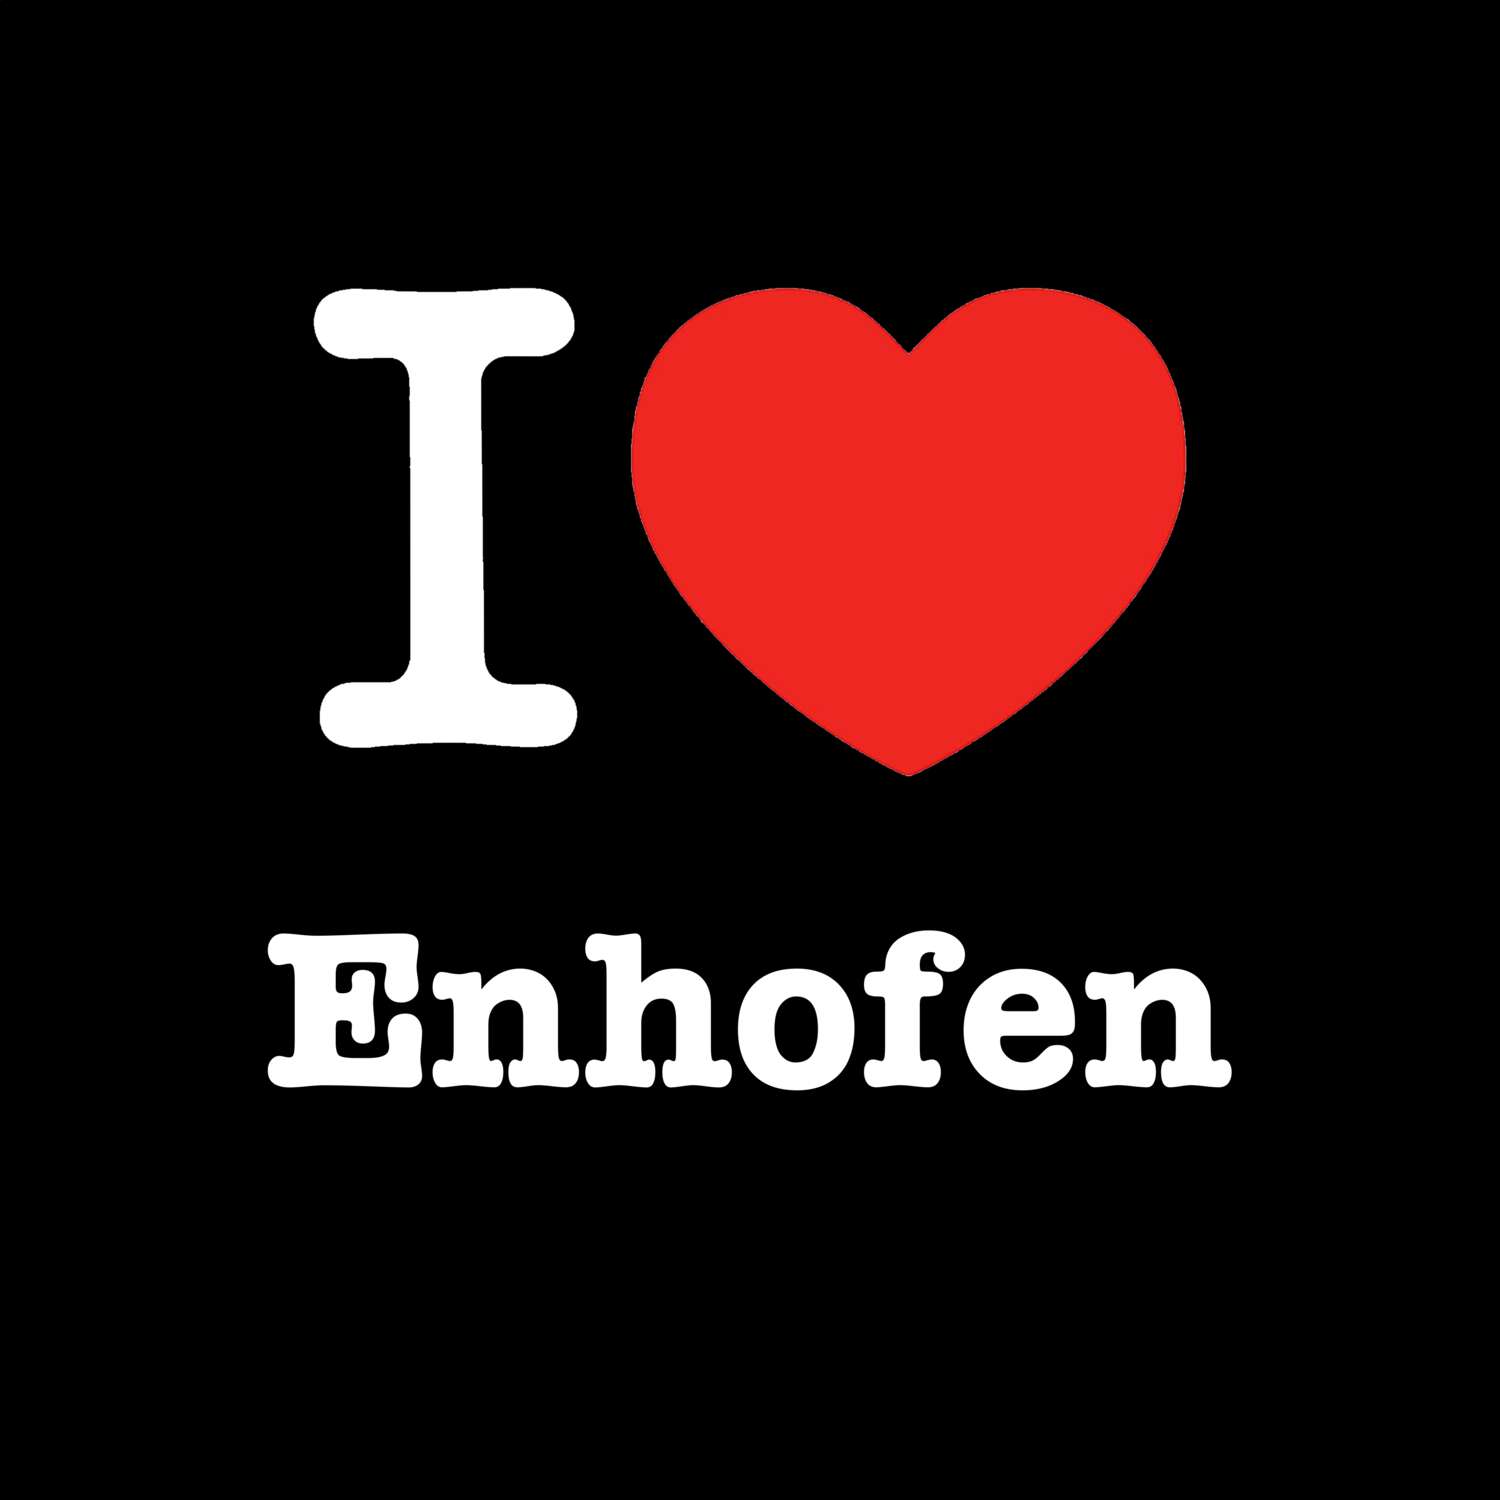 Enhofen T-Shirt »I love«